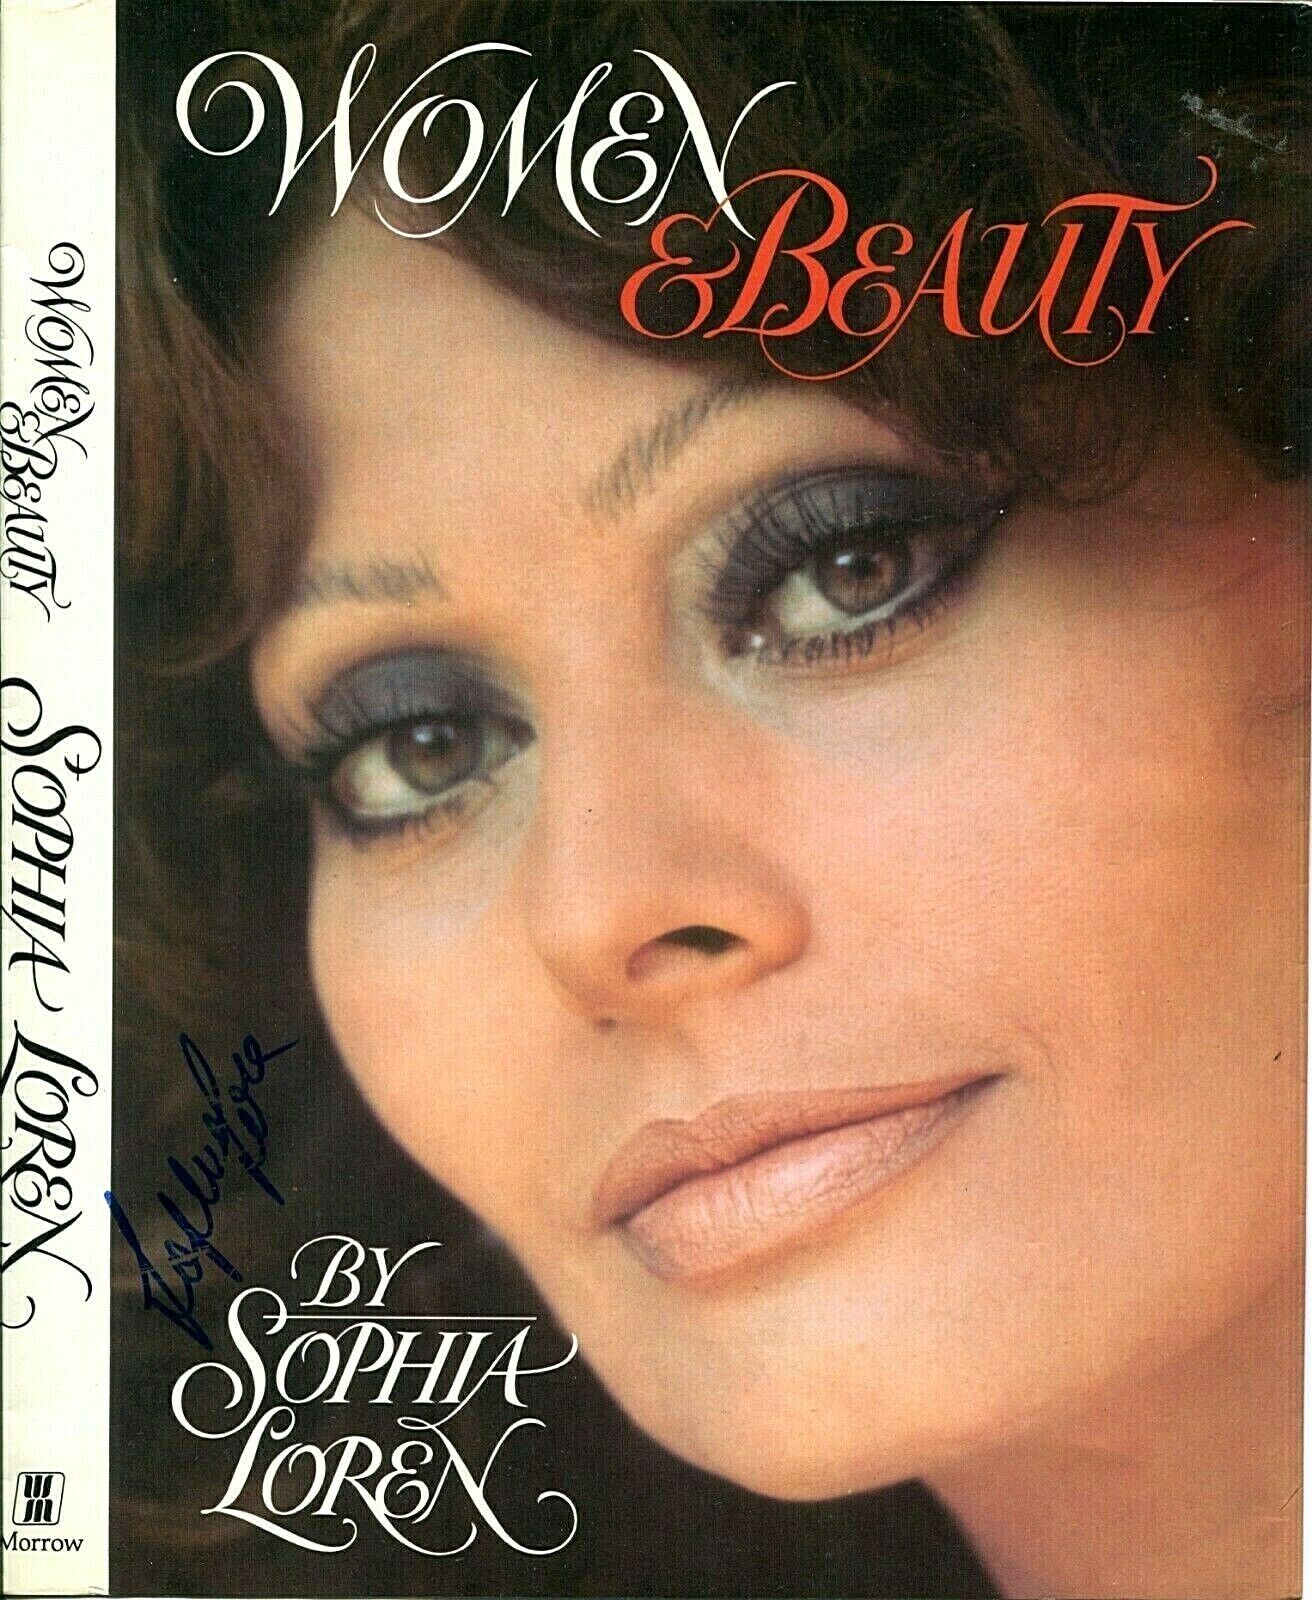 SOPHIA LOREN Autographed book cover PC 2520